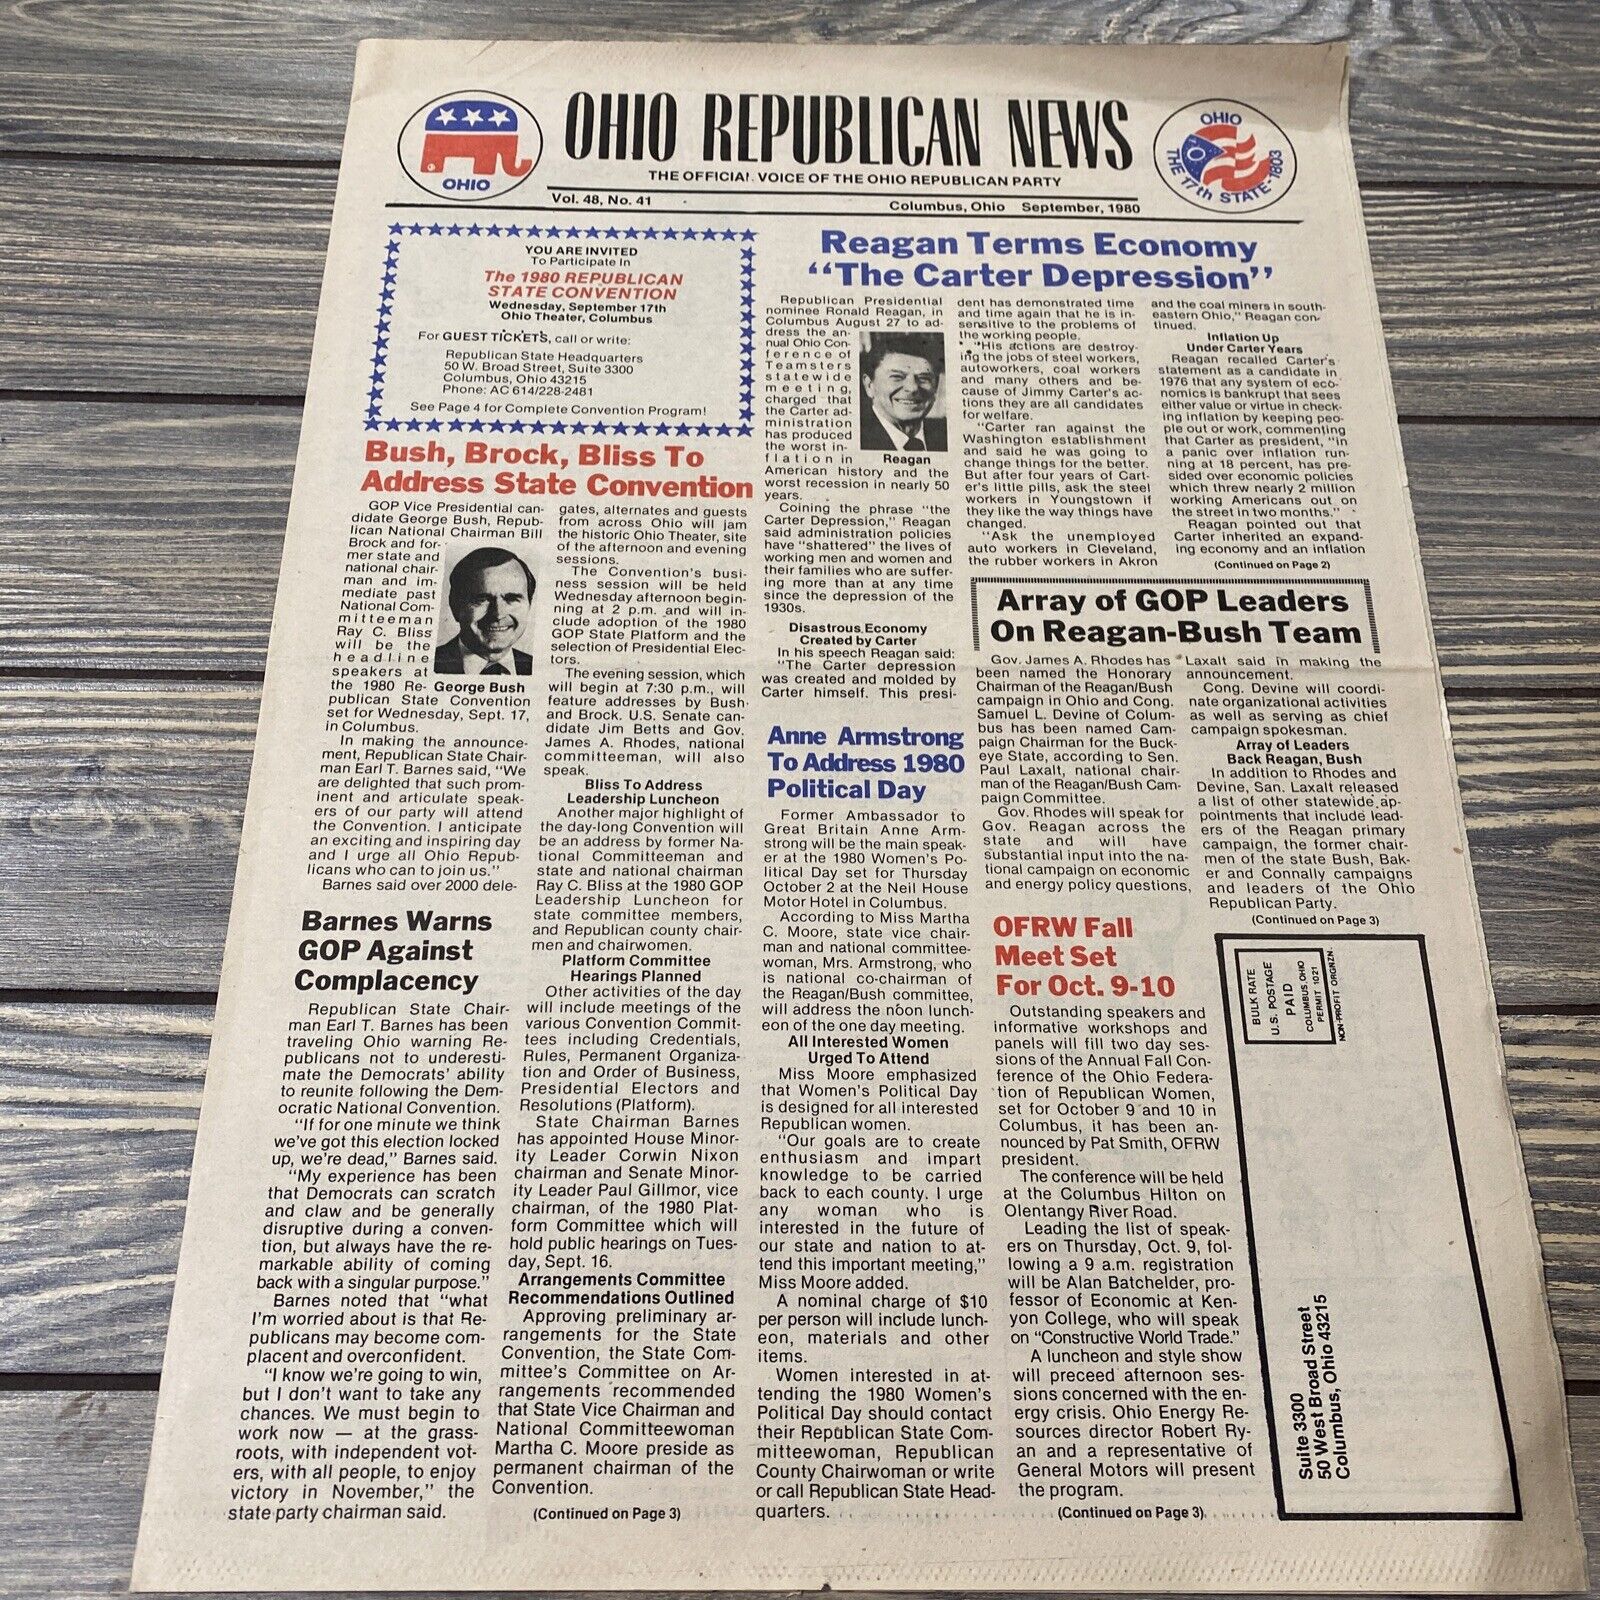 Vintage 1980 Ohio Republican News Vol 48 No 41 September Reagan Terms Economy